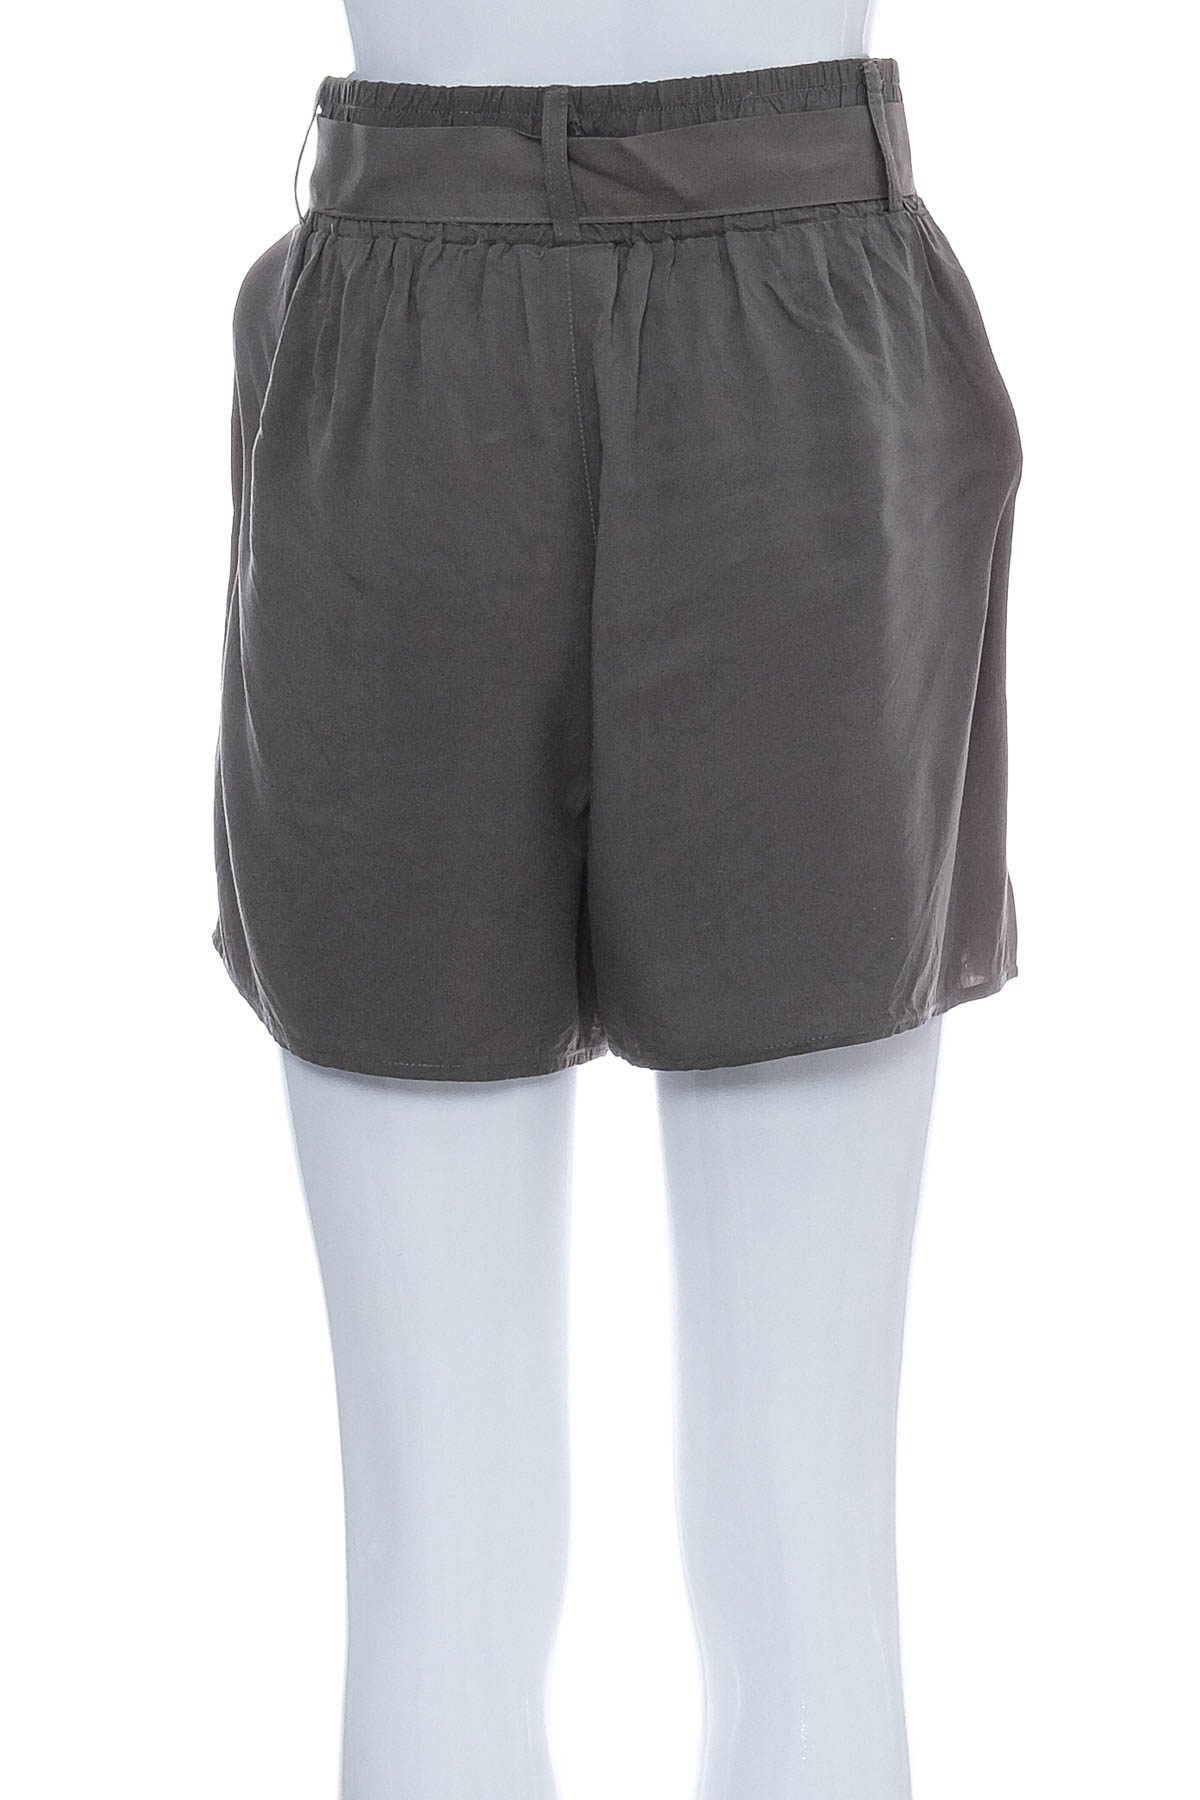 Female shorts - Takko Fashion - 1